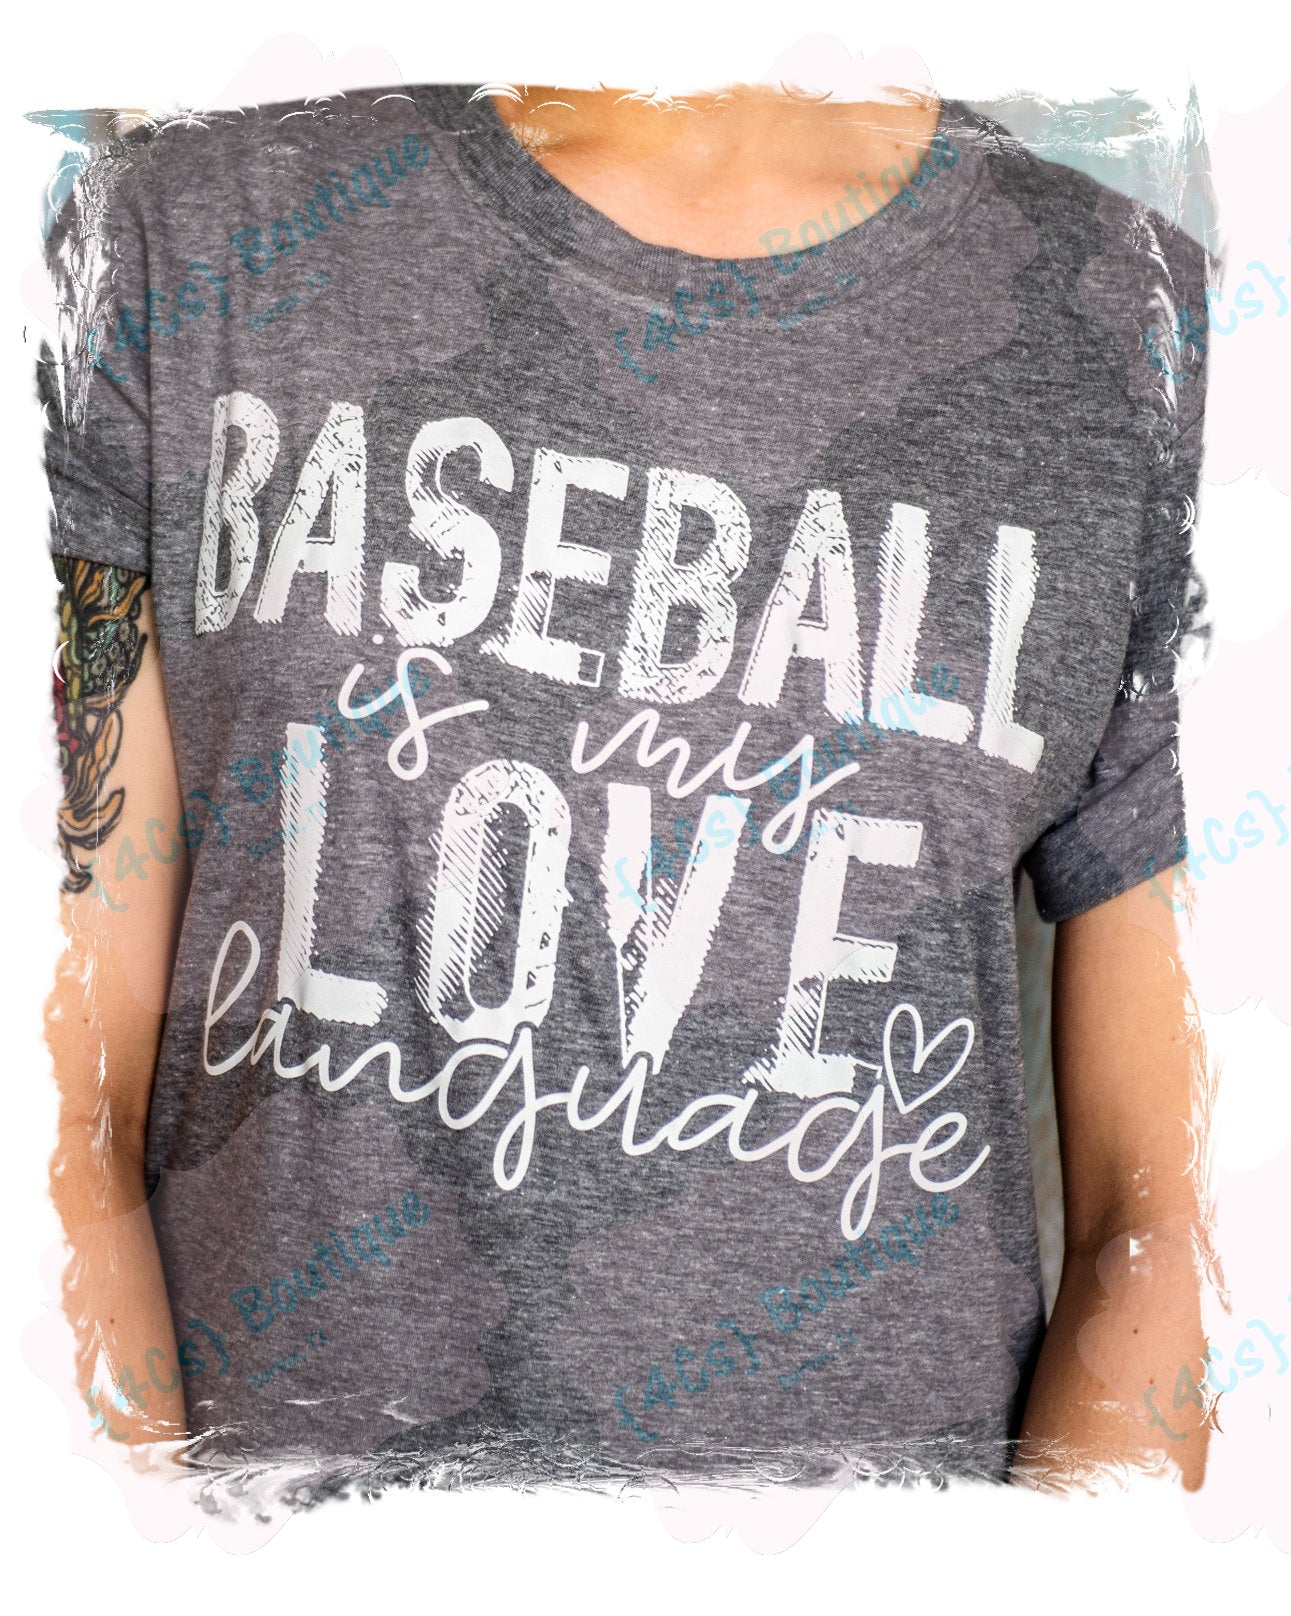 Baseball Is My Love Language Shirt